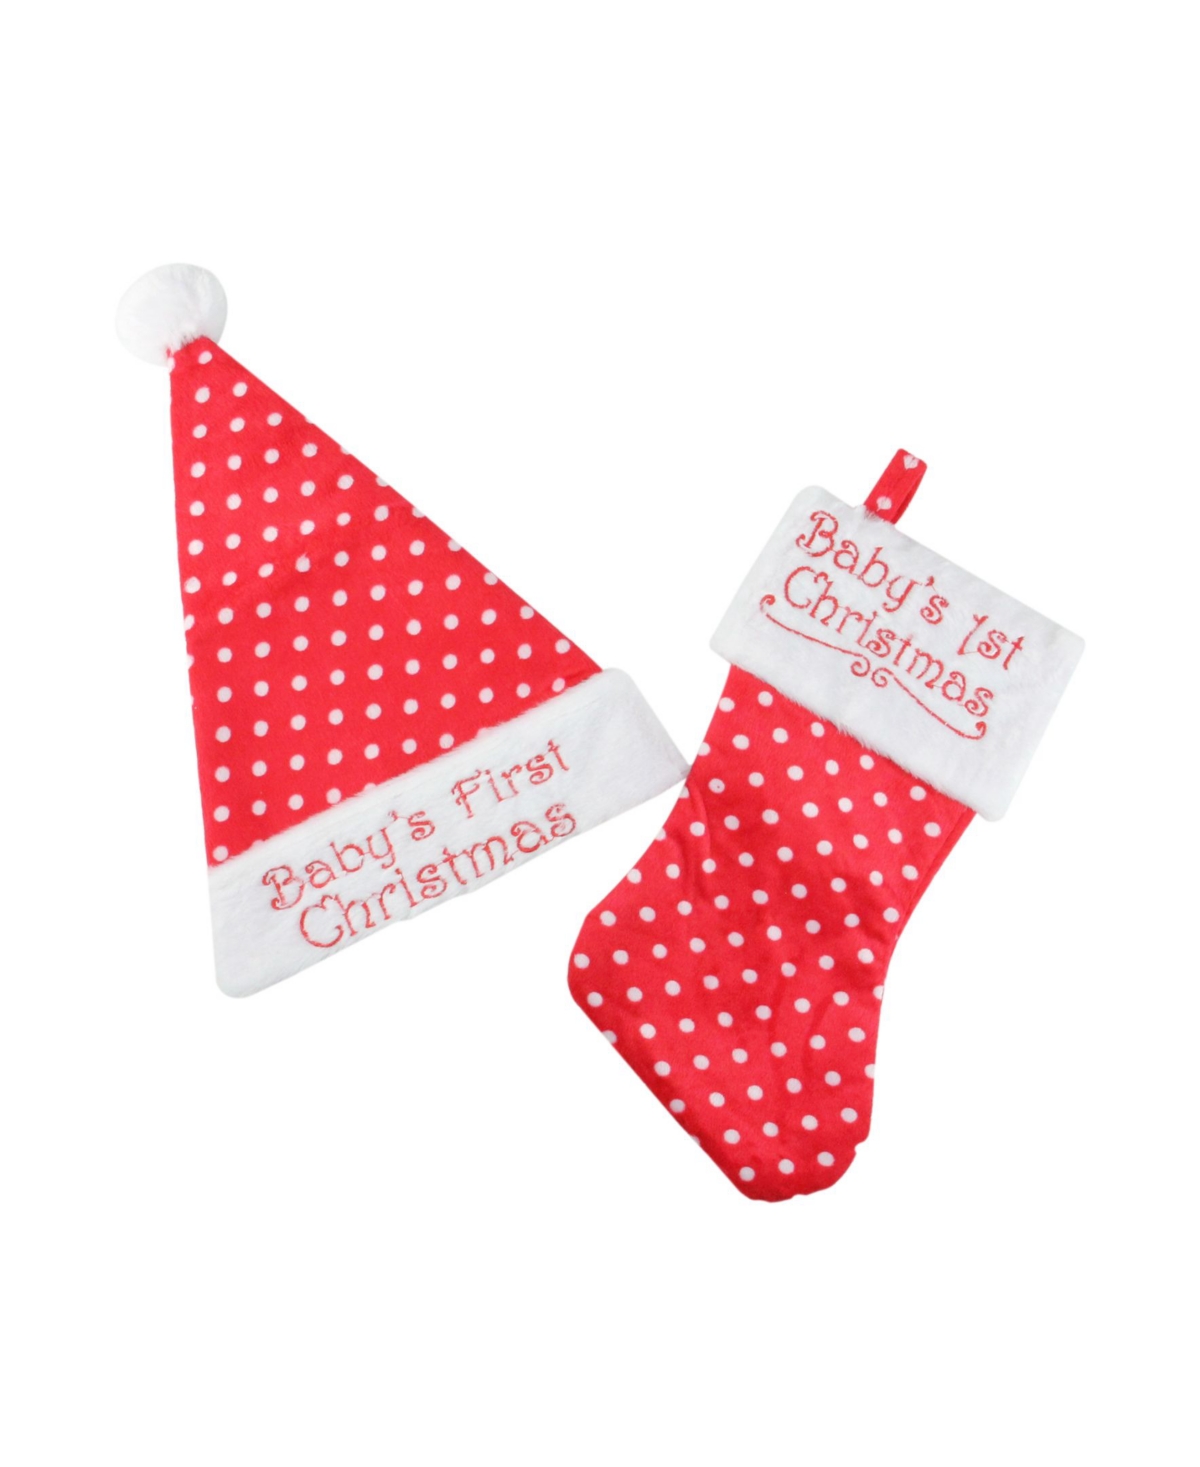 12" Red Super Soft Polka Dot Baby's 1st Christmas Santa Hat and Stocking Set - White